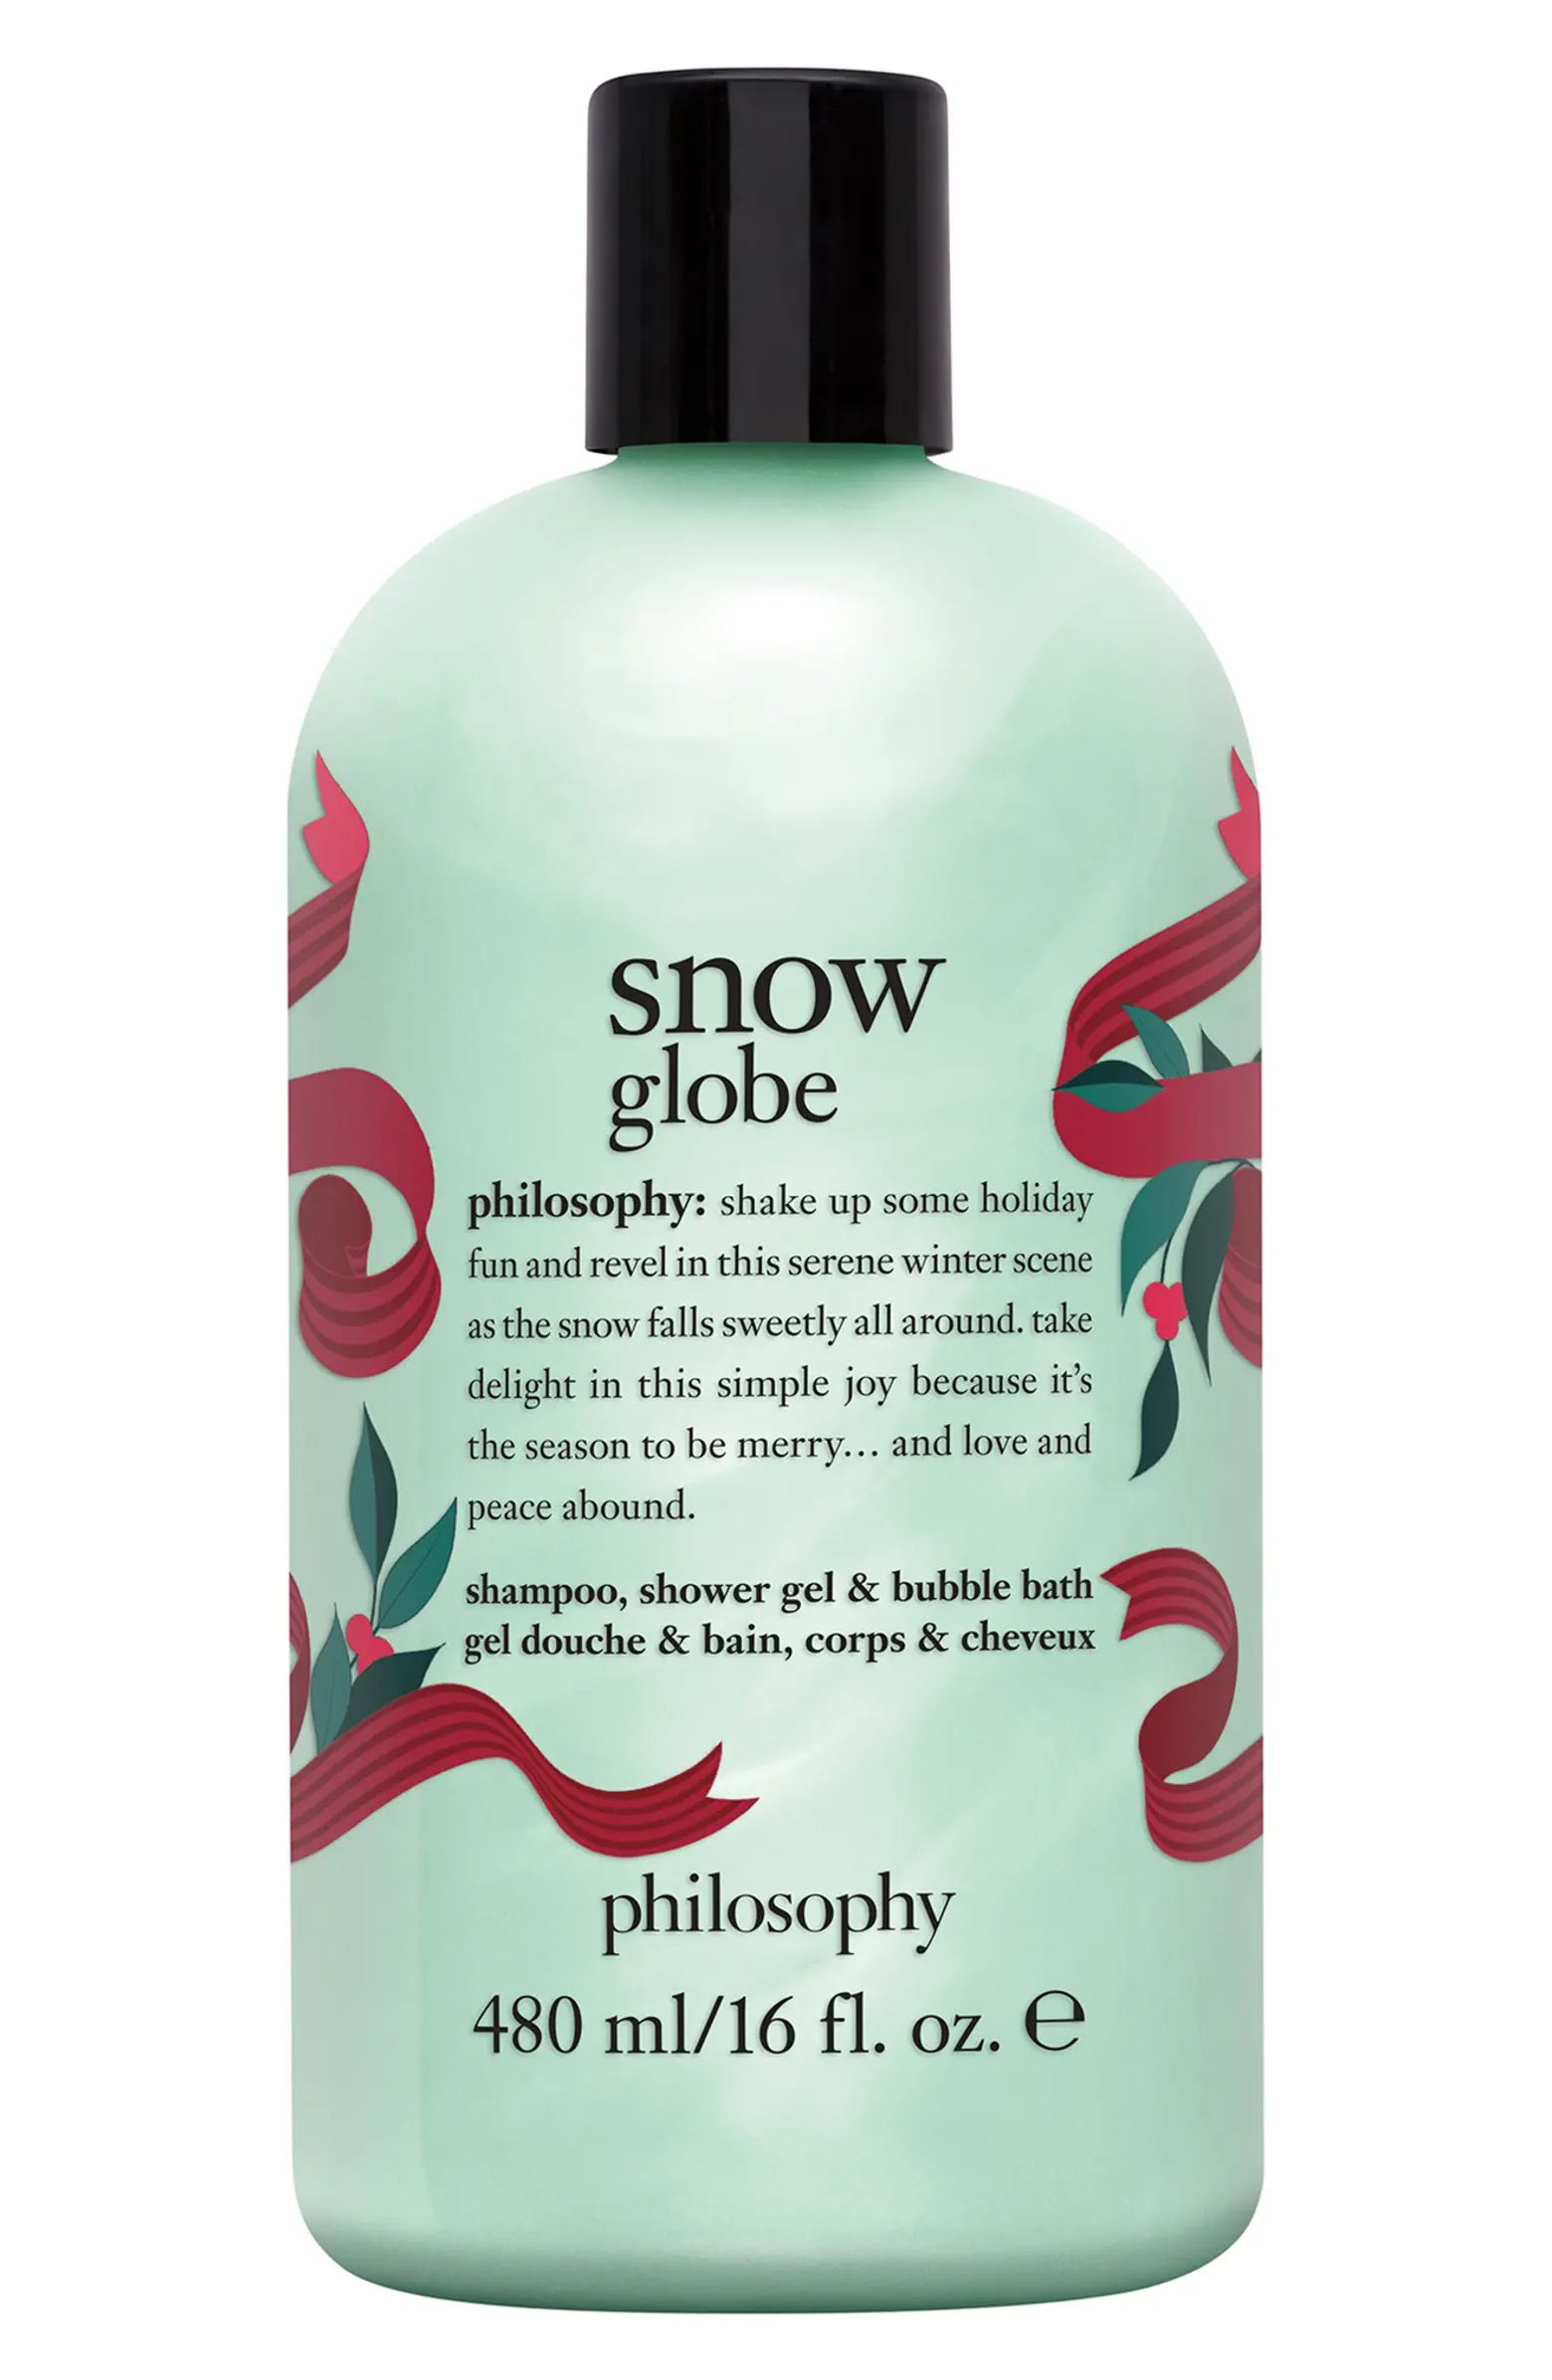 philosophy shampoo, shower gel & bubble bath | Nordstrom | Nordstrom